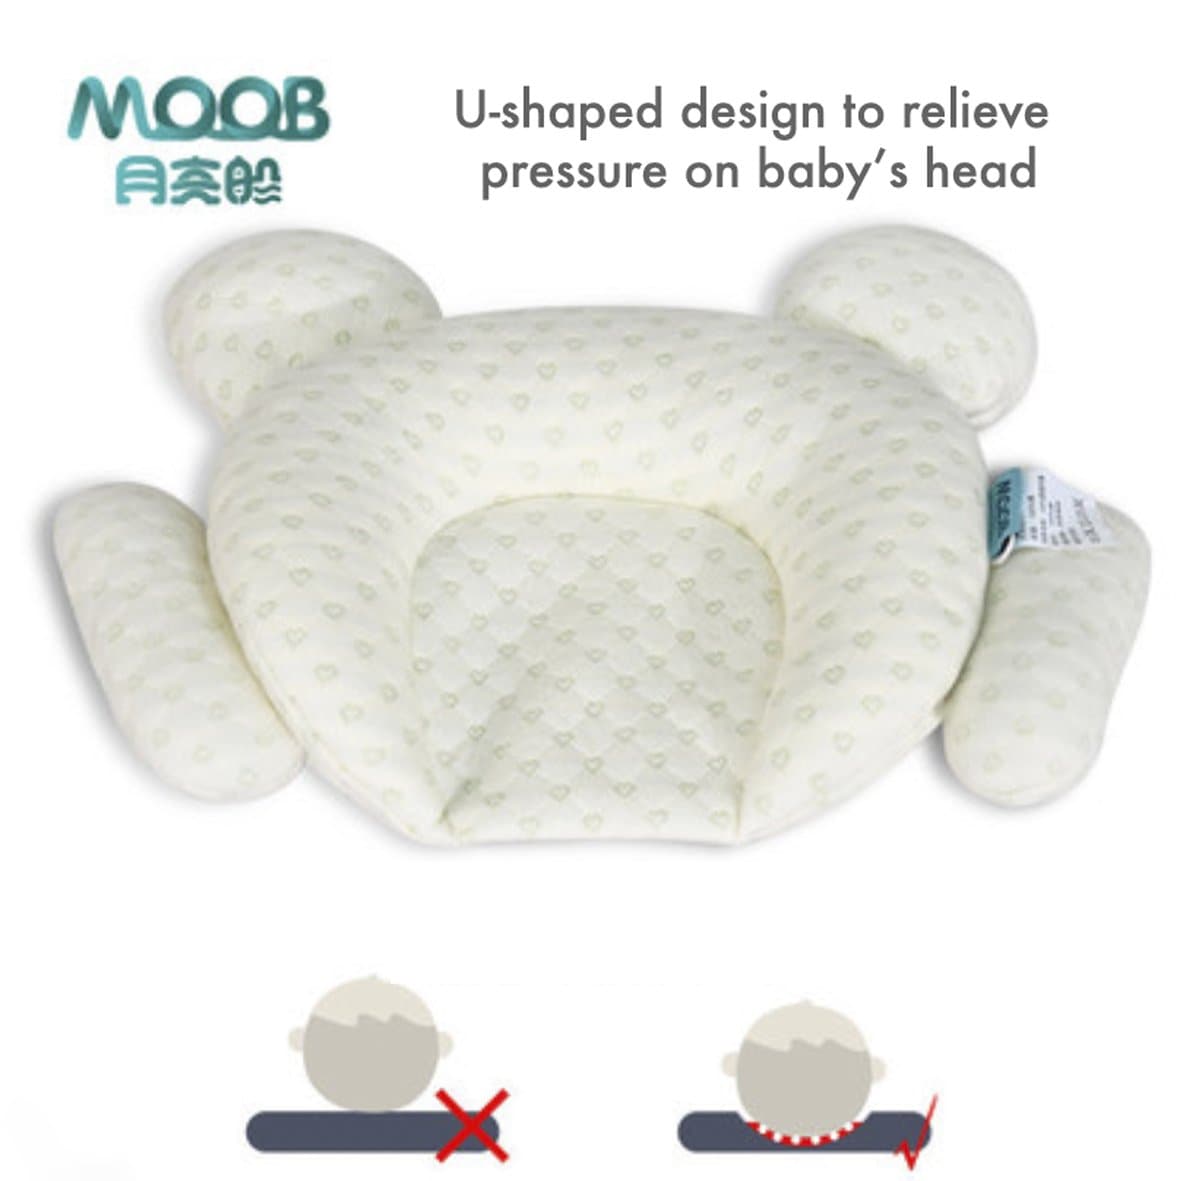 MOOB Baby Anti-Flathead Latex Pillow